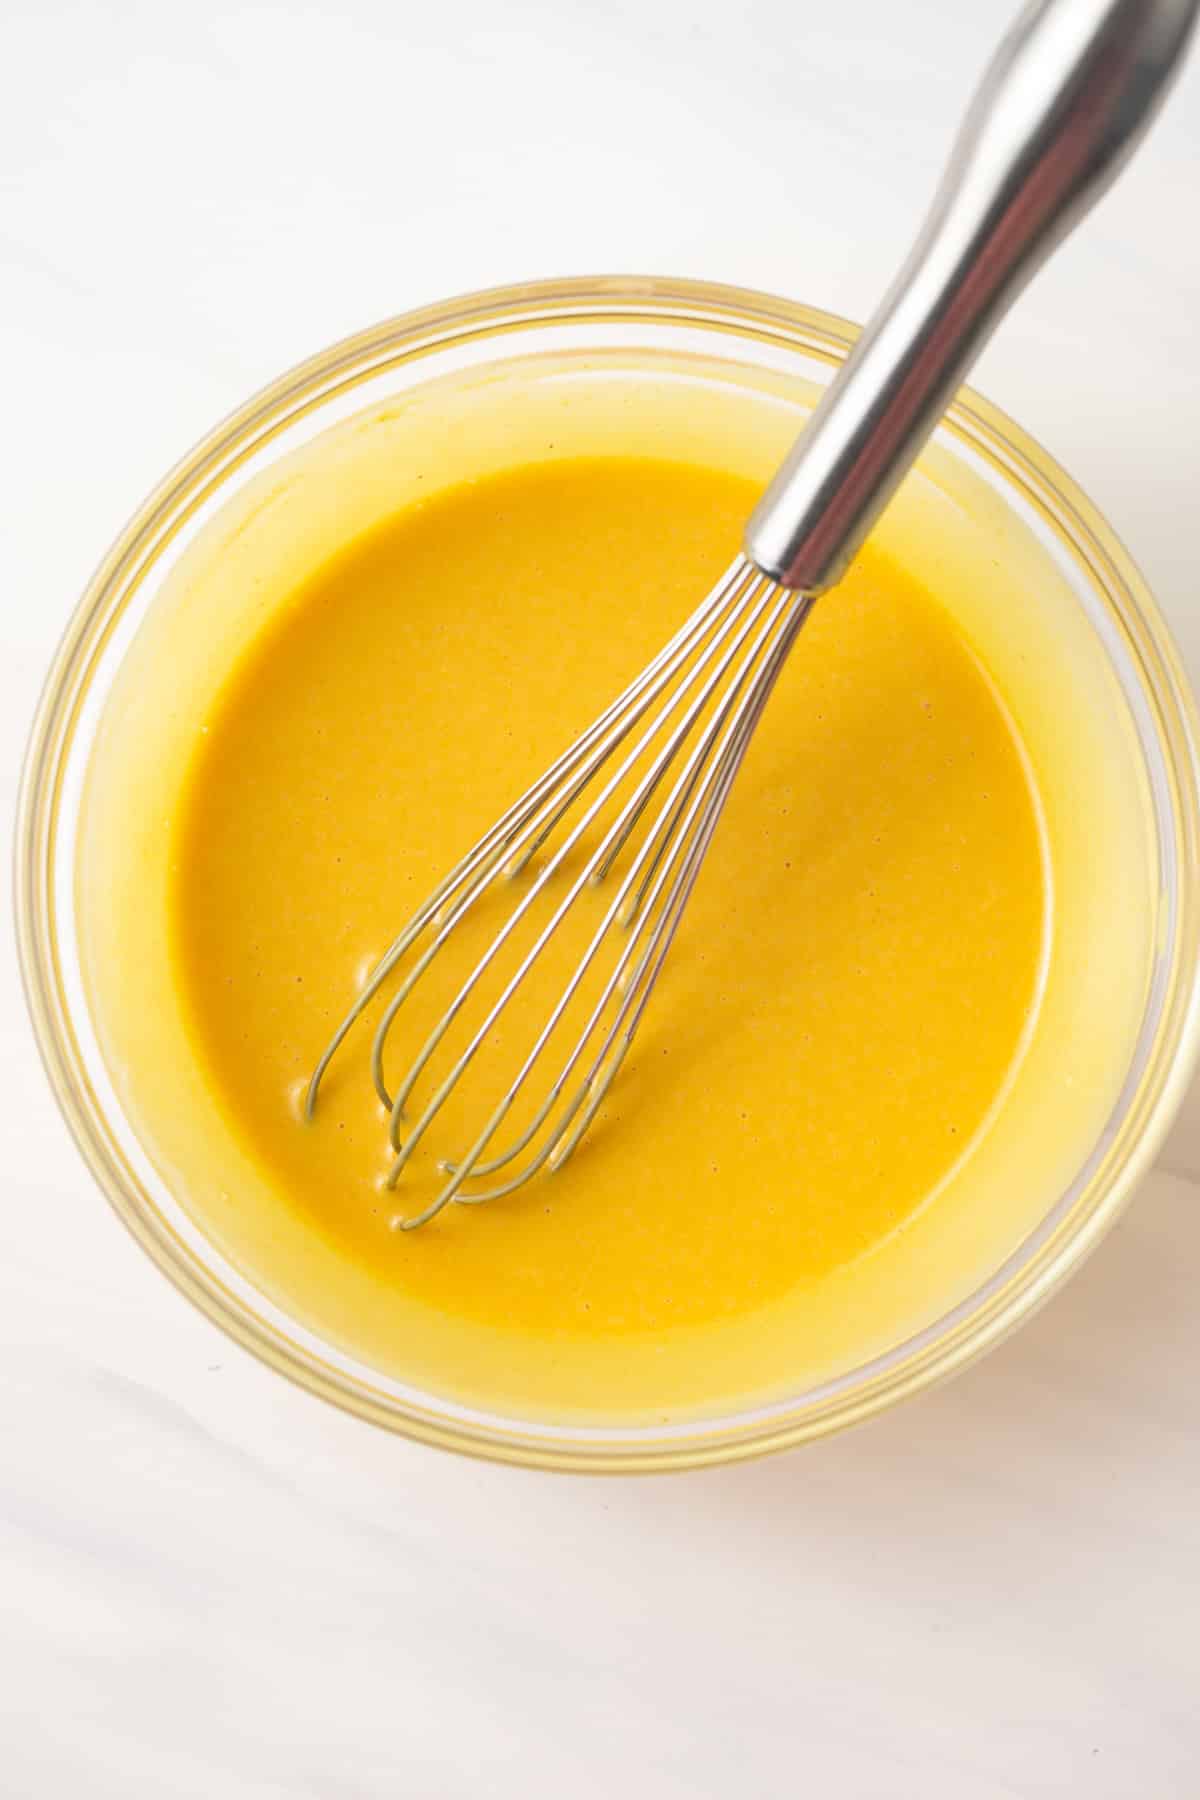 Honey mustard dressing in glass bowl.